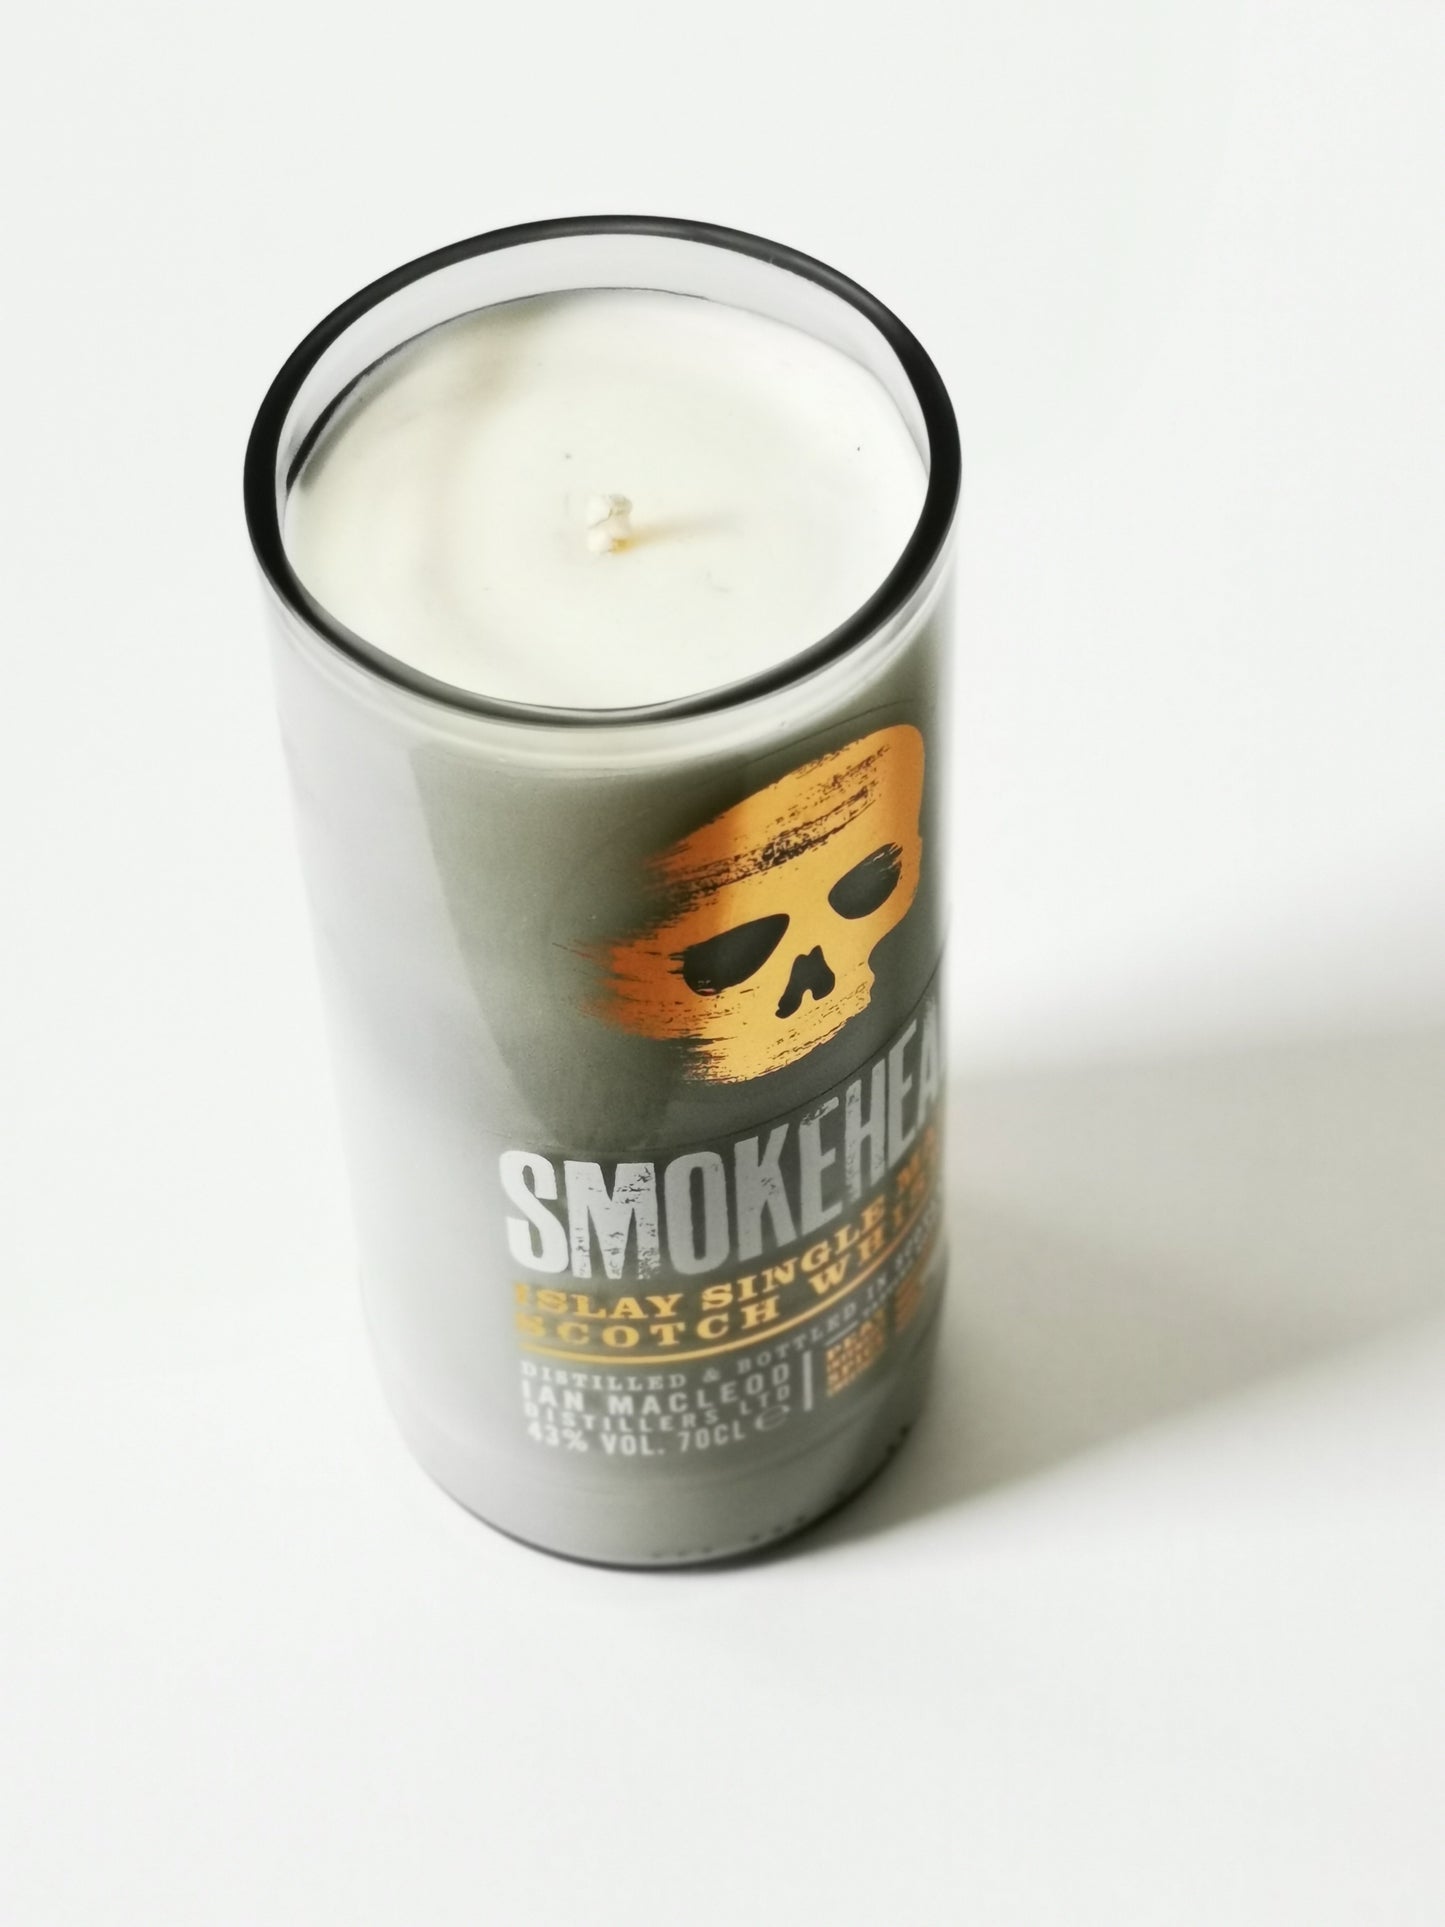 Smokehead Whisky Bottle Candle-Whiskey Bottle Candles-Adhock Homeware